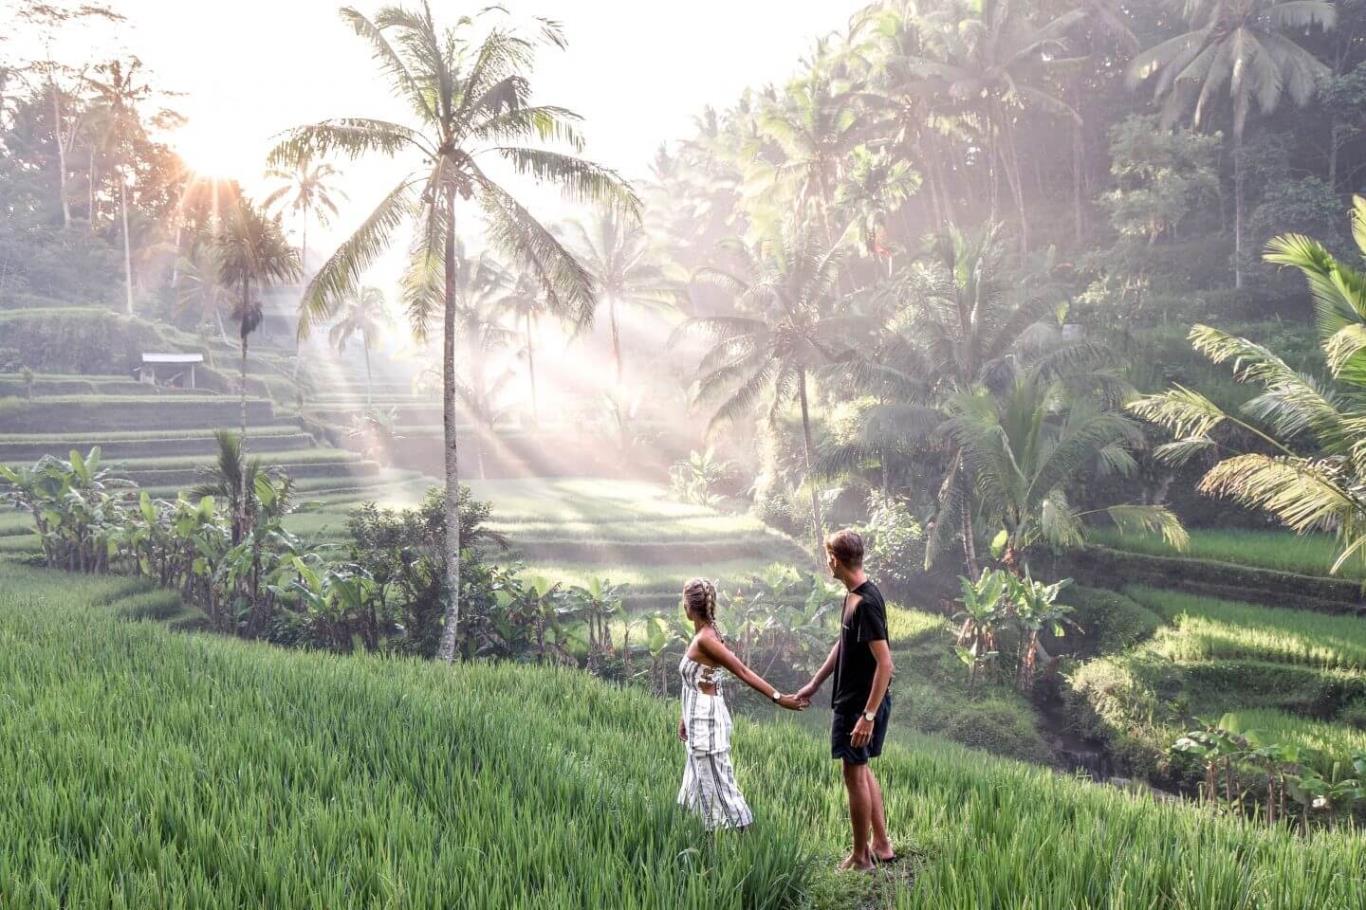  Bali, Indonesia 